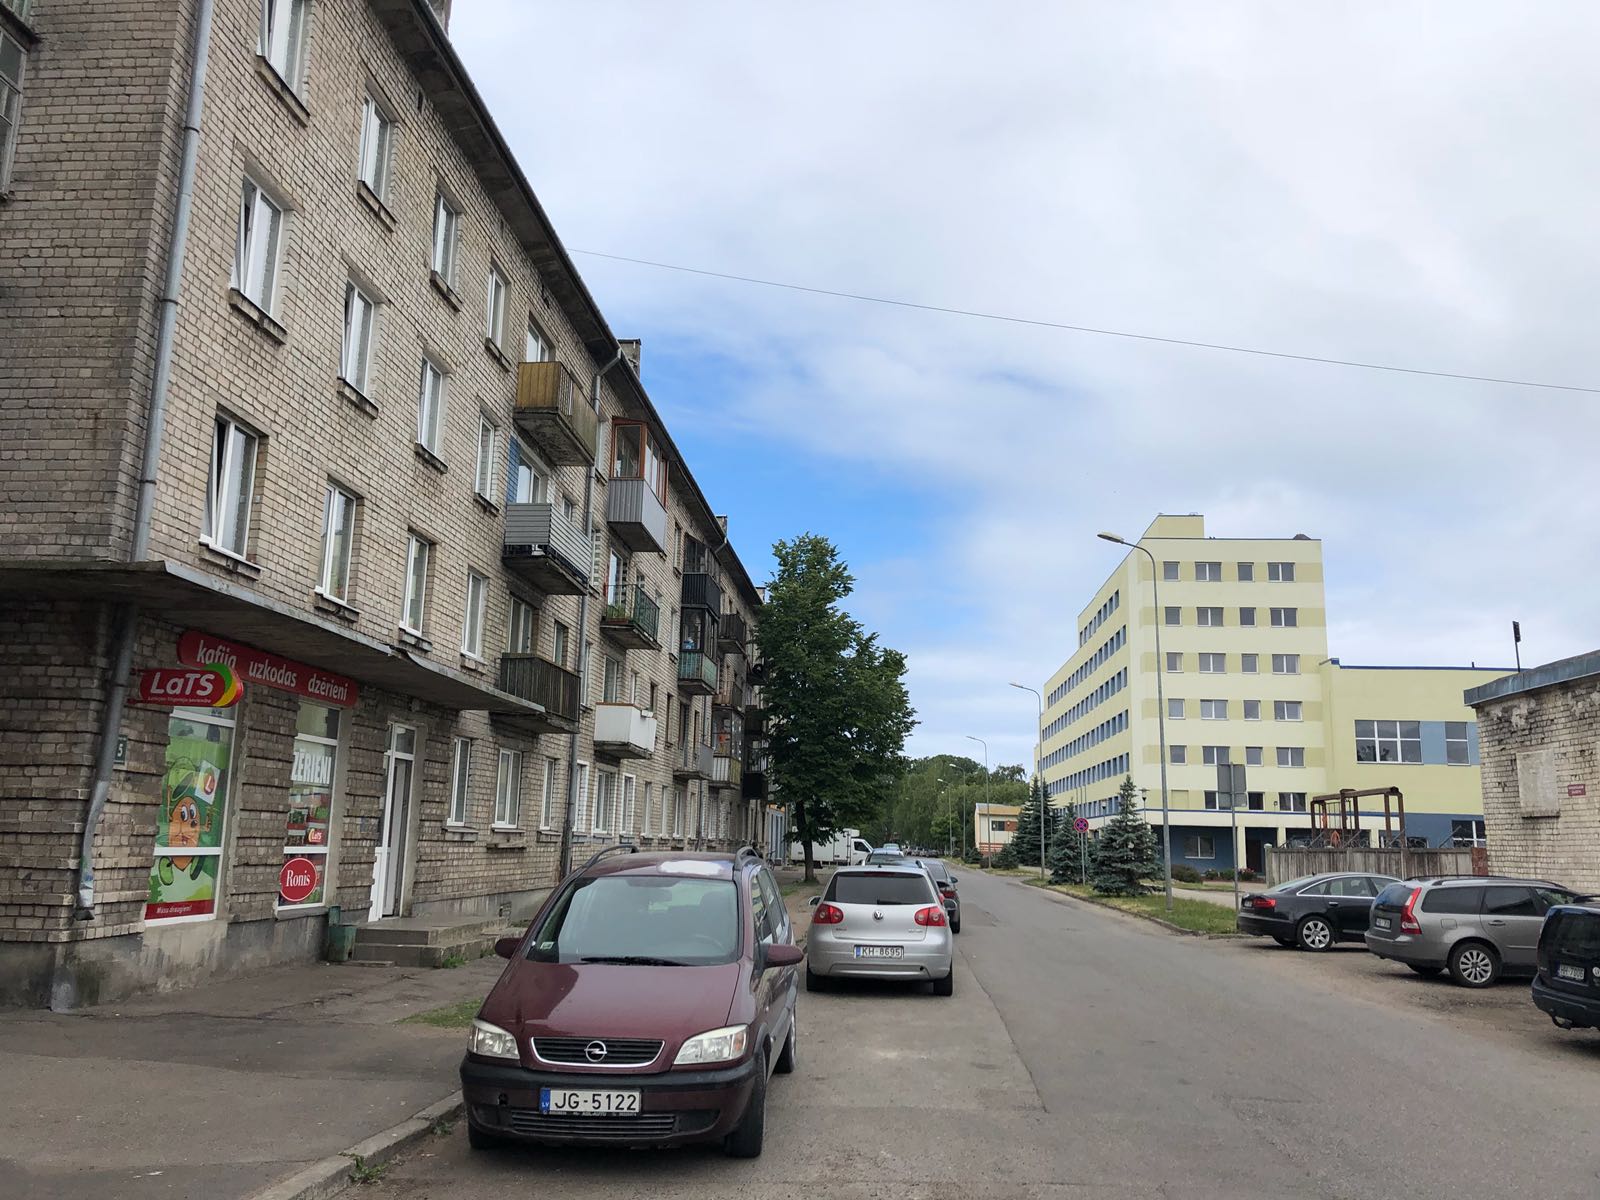 2-room apartment in the center of Liepaja